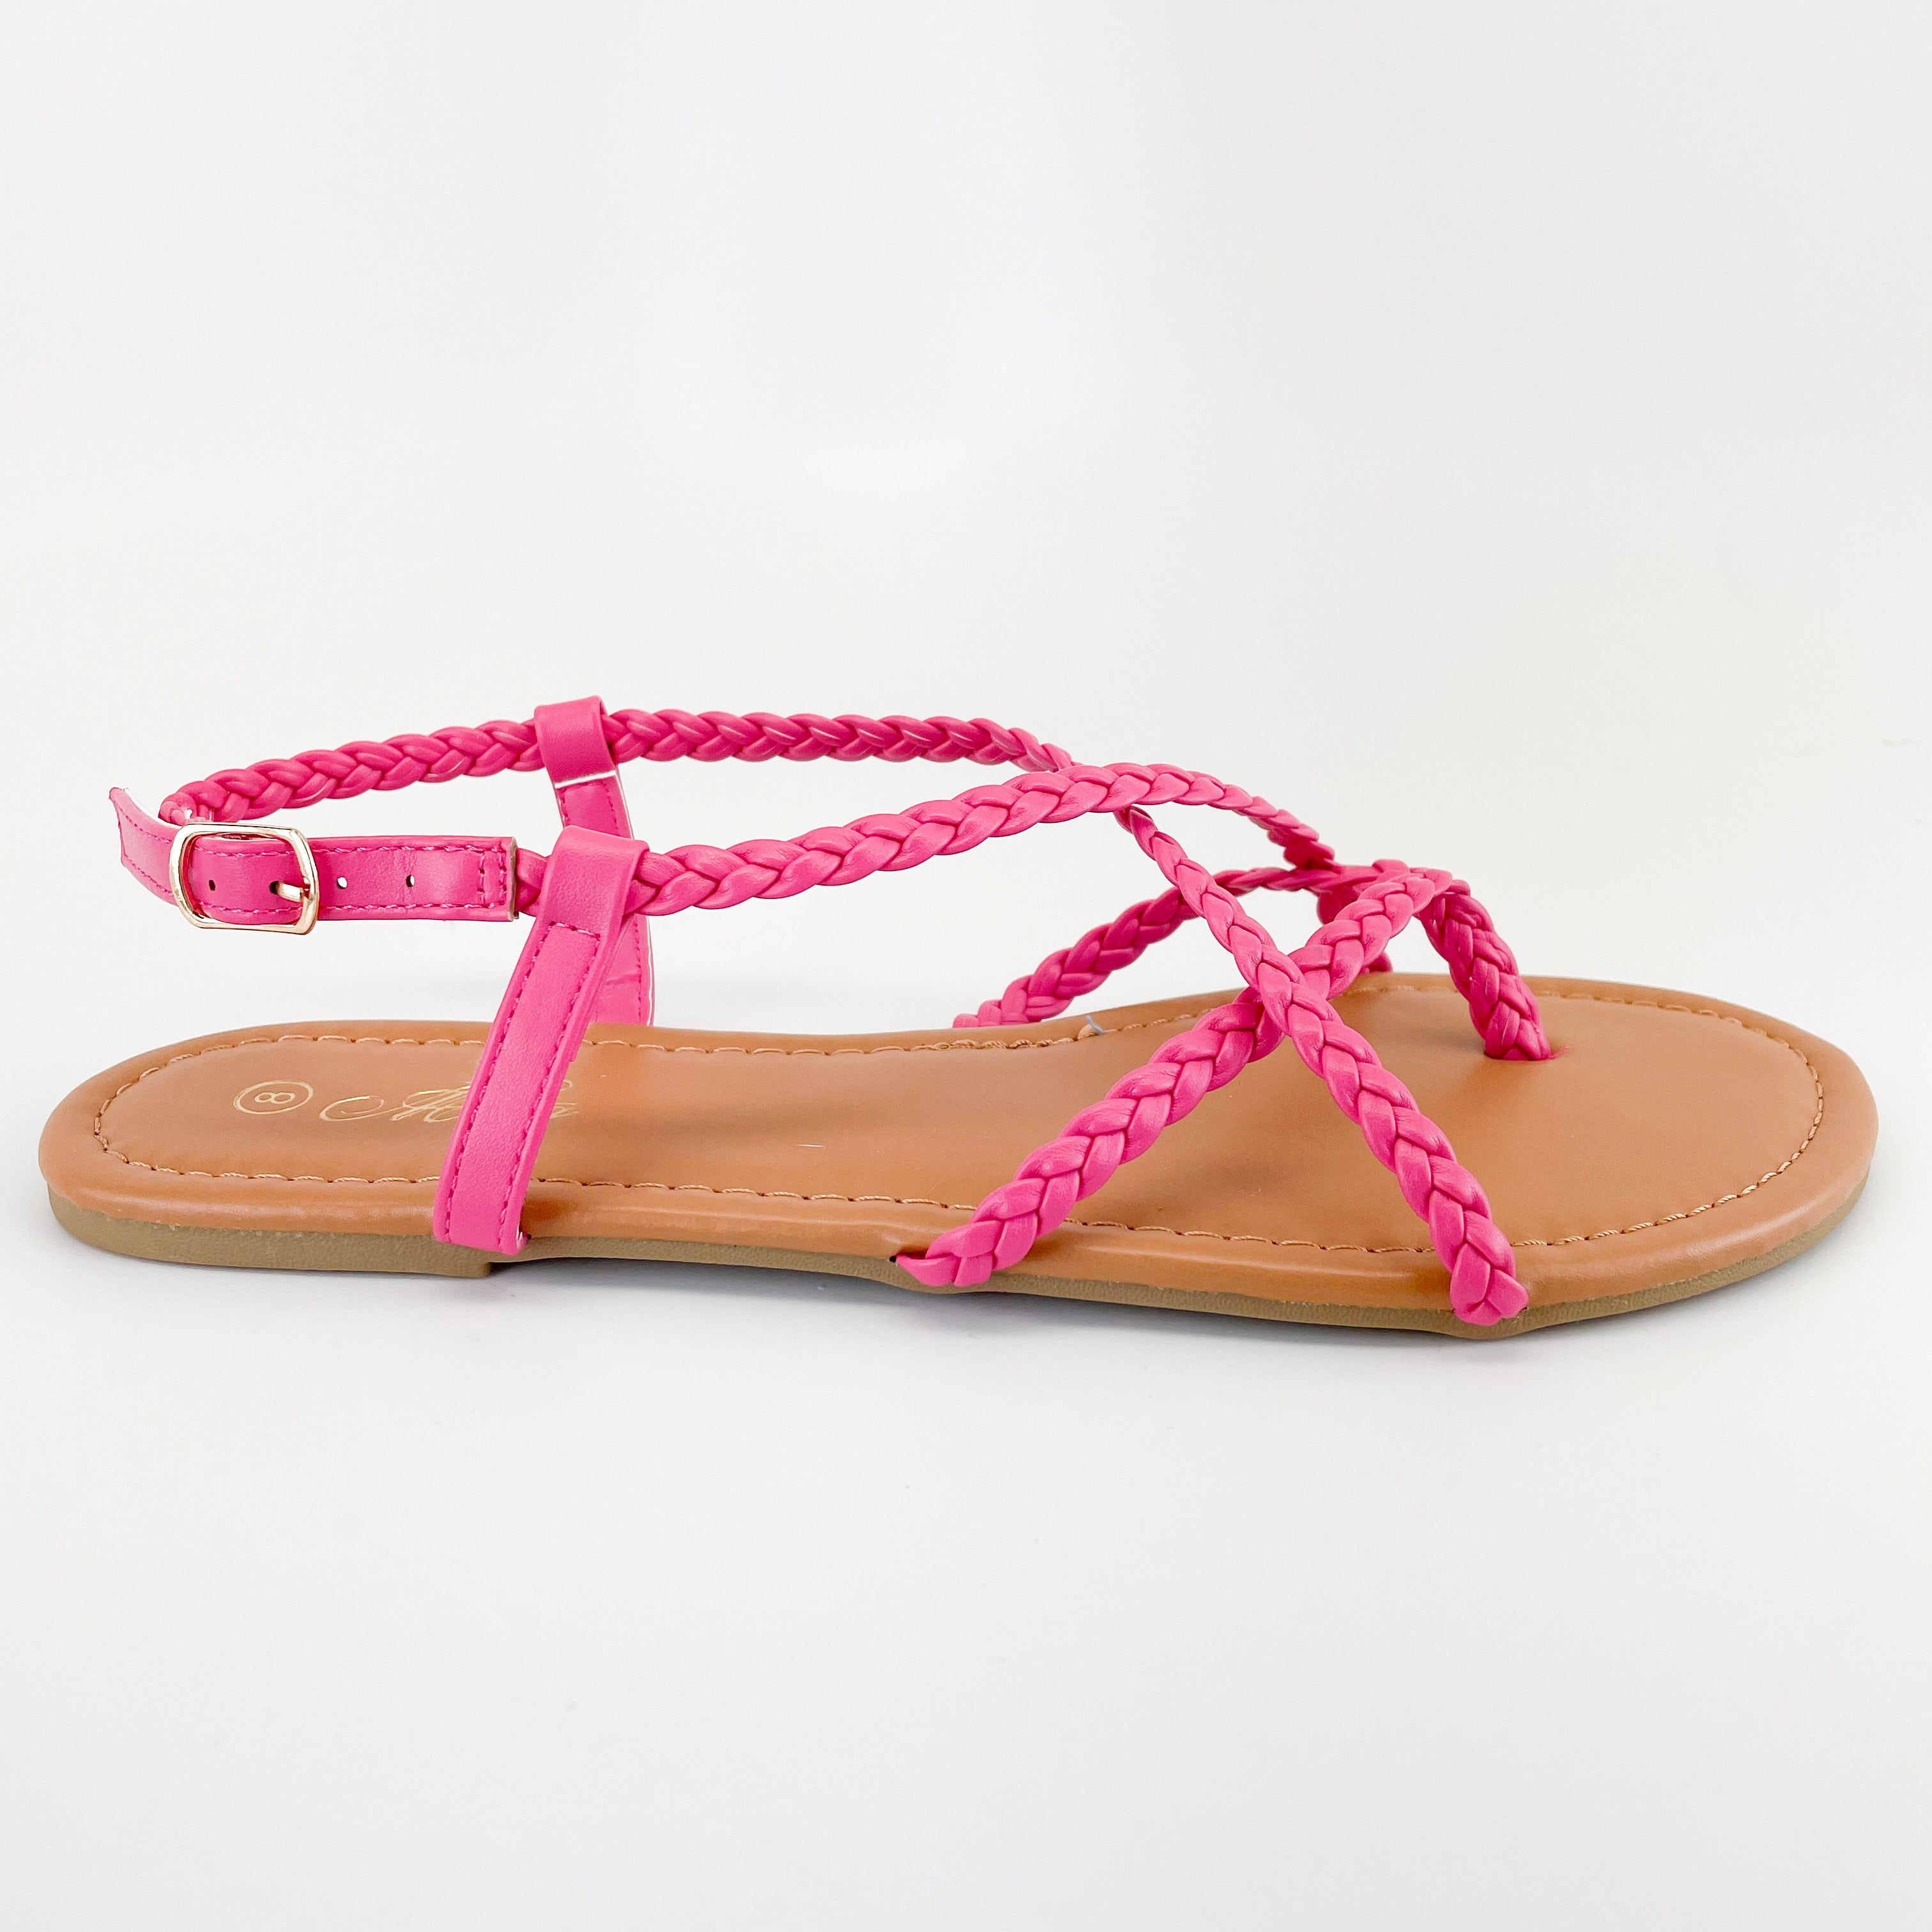 Pietro Hot Pink Leather Sandals by Django & Juliette | Shop Online at  Mathers